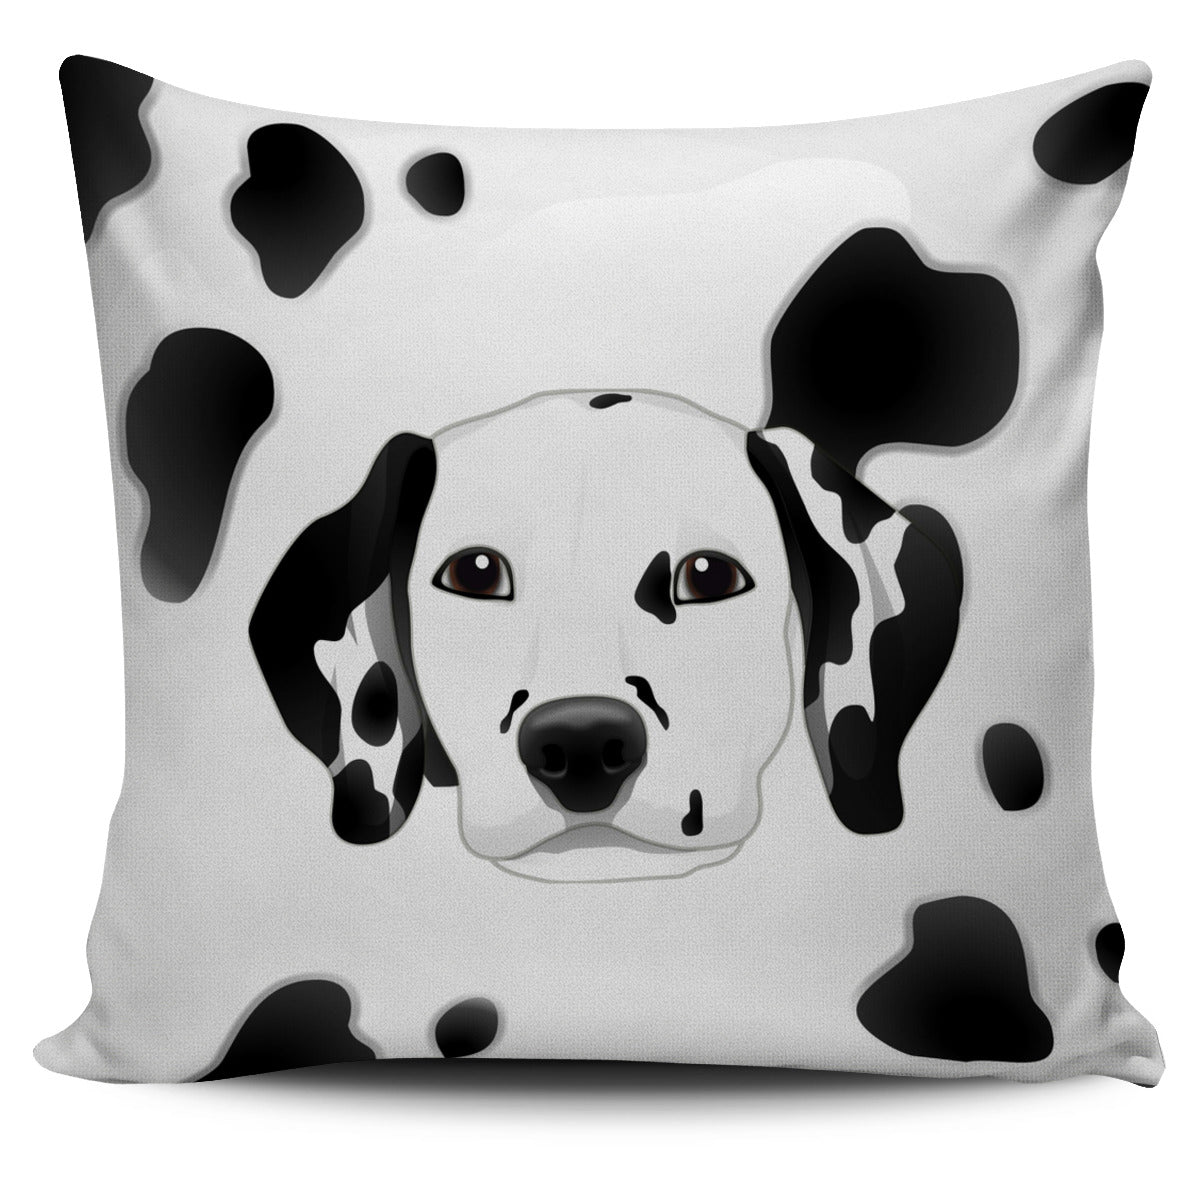 Real Dalmatian Pillow Cover